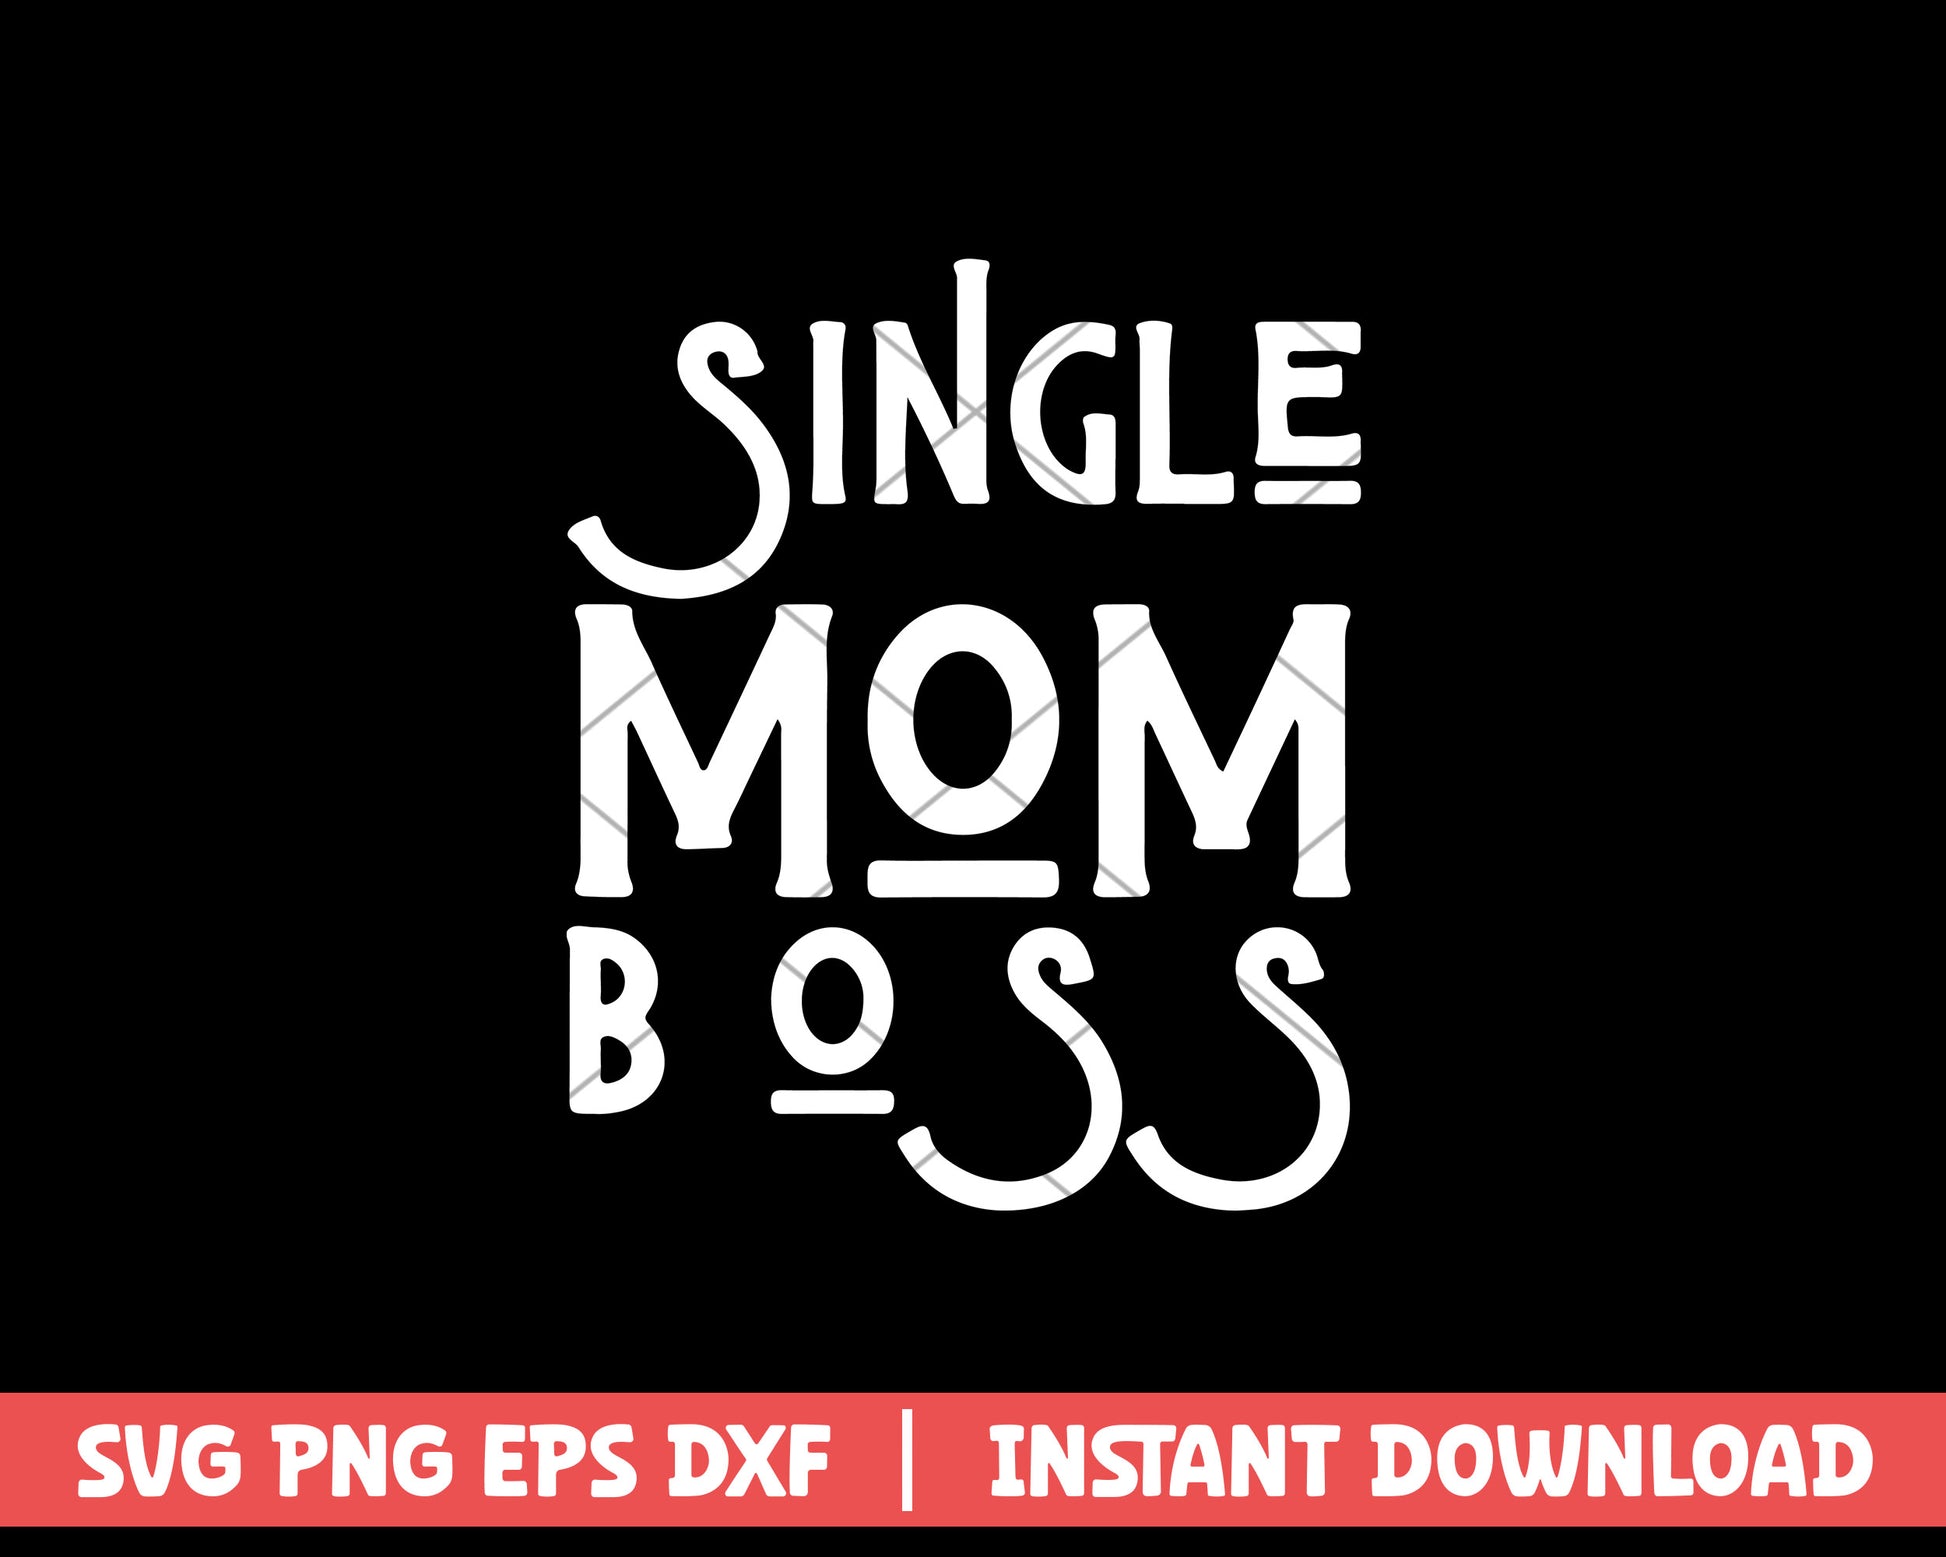 Single mom boss mothers day svg